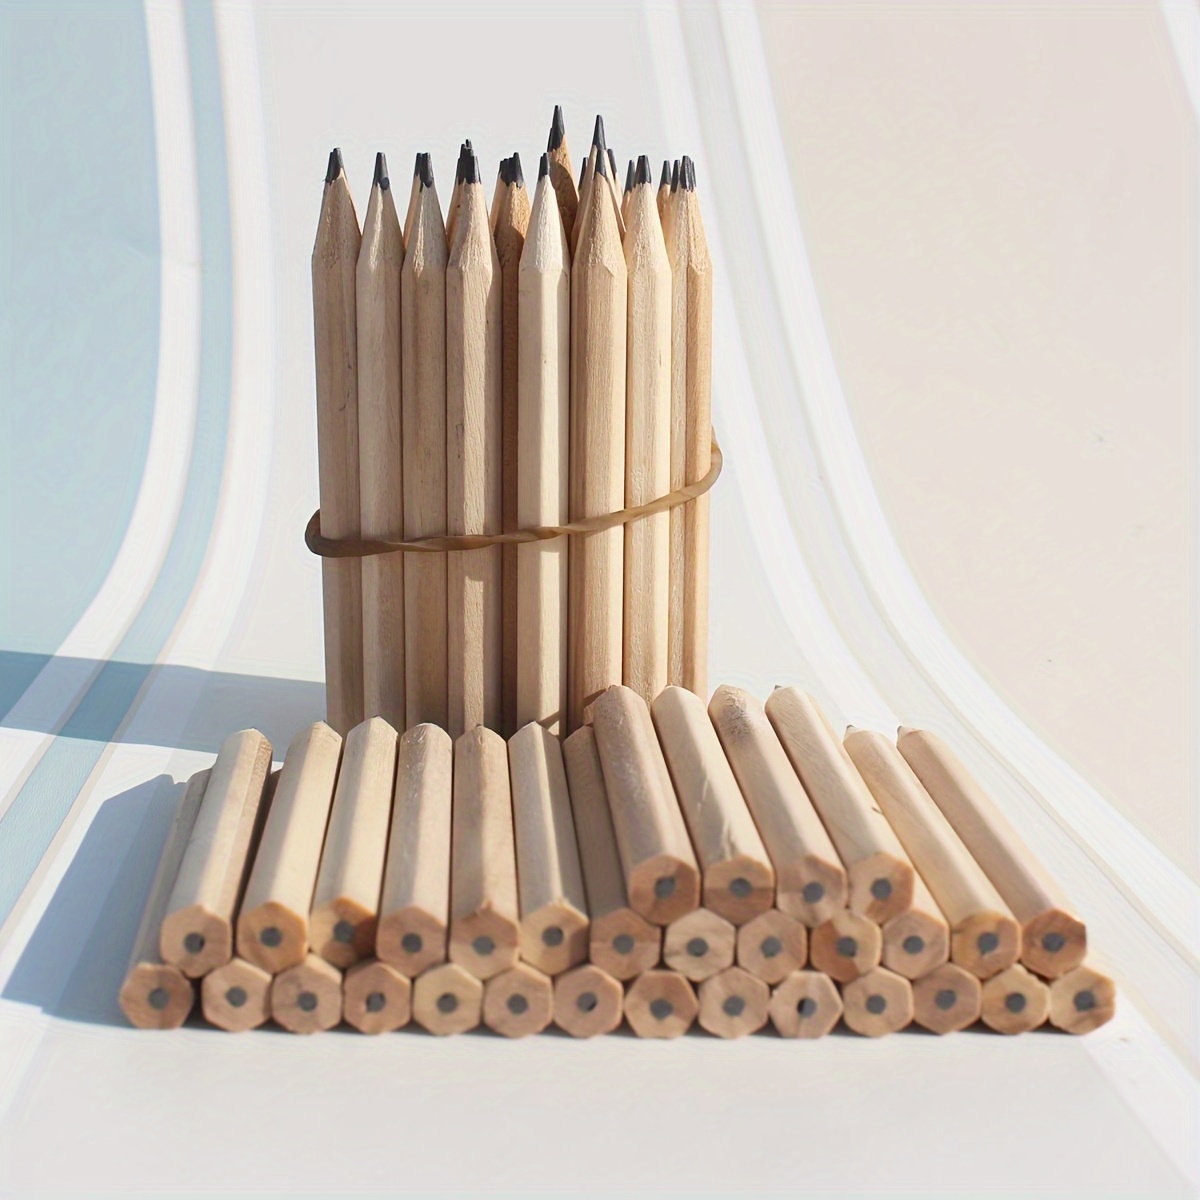 

50pcs Short Wooden Pencil, Writing Pencil, Drawing Pencils, School Stationery Supplies